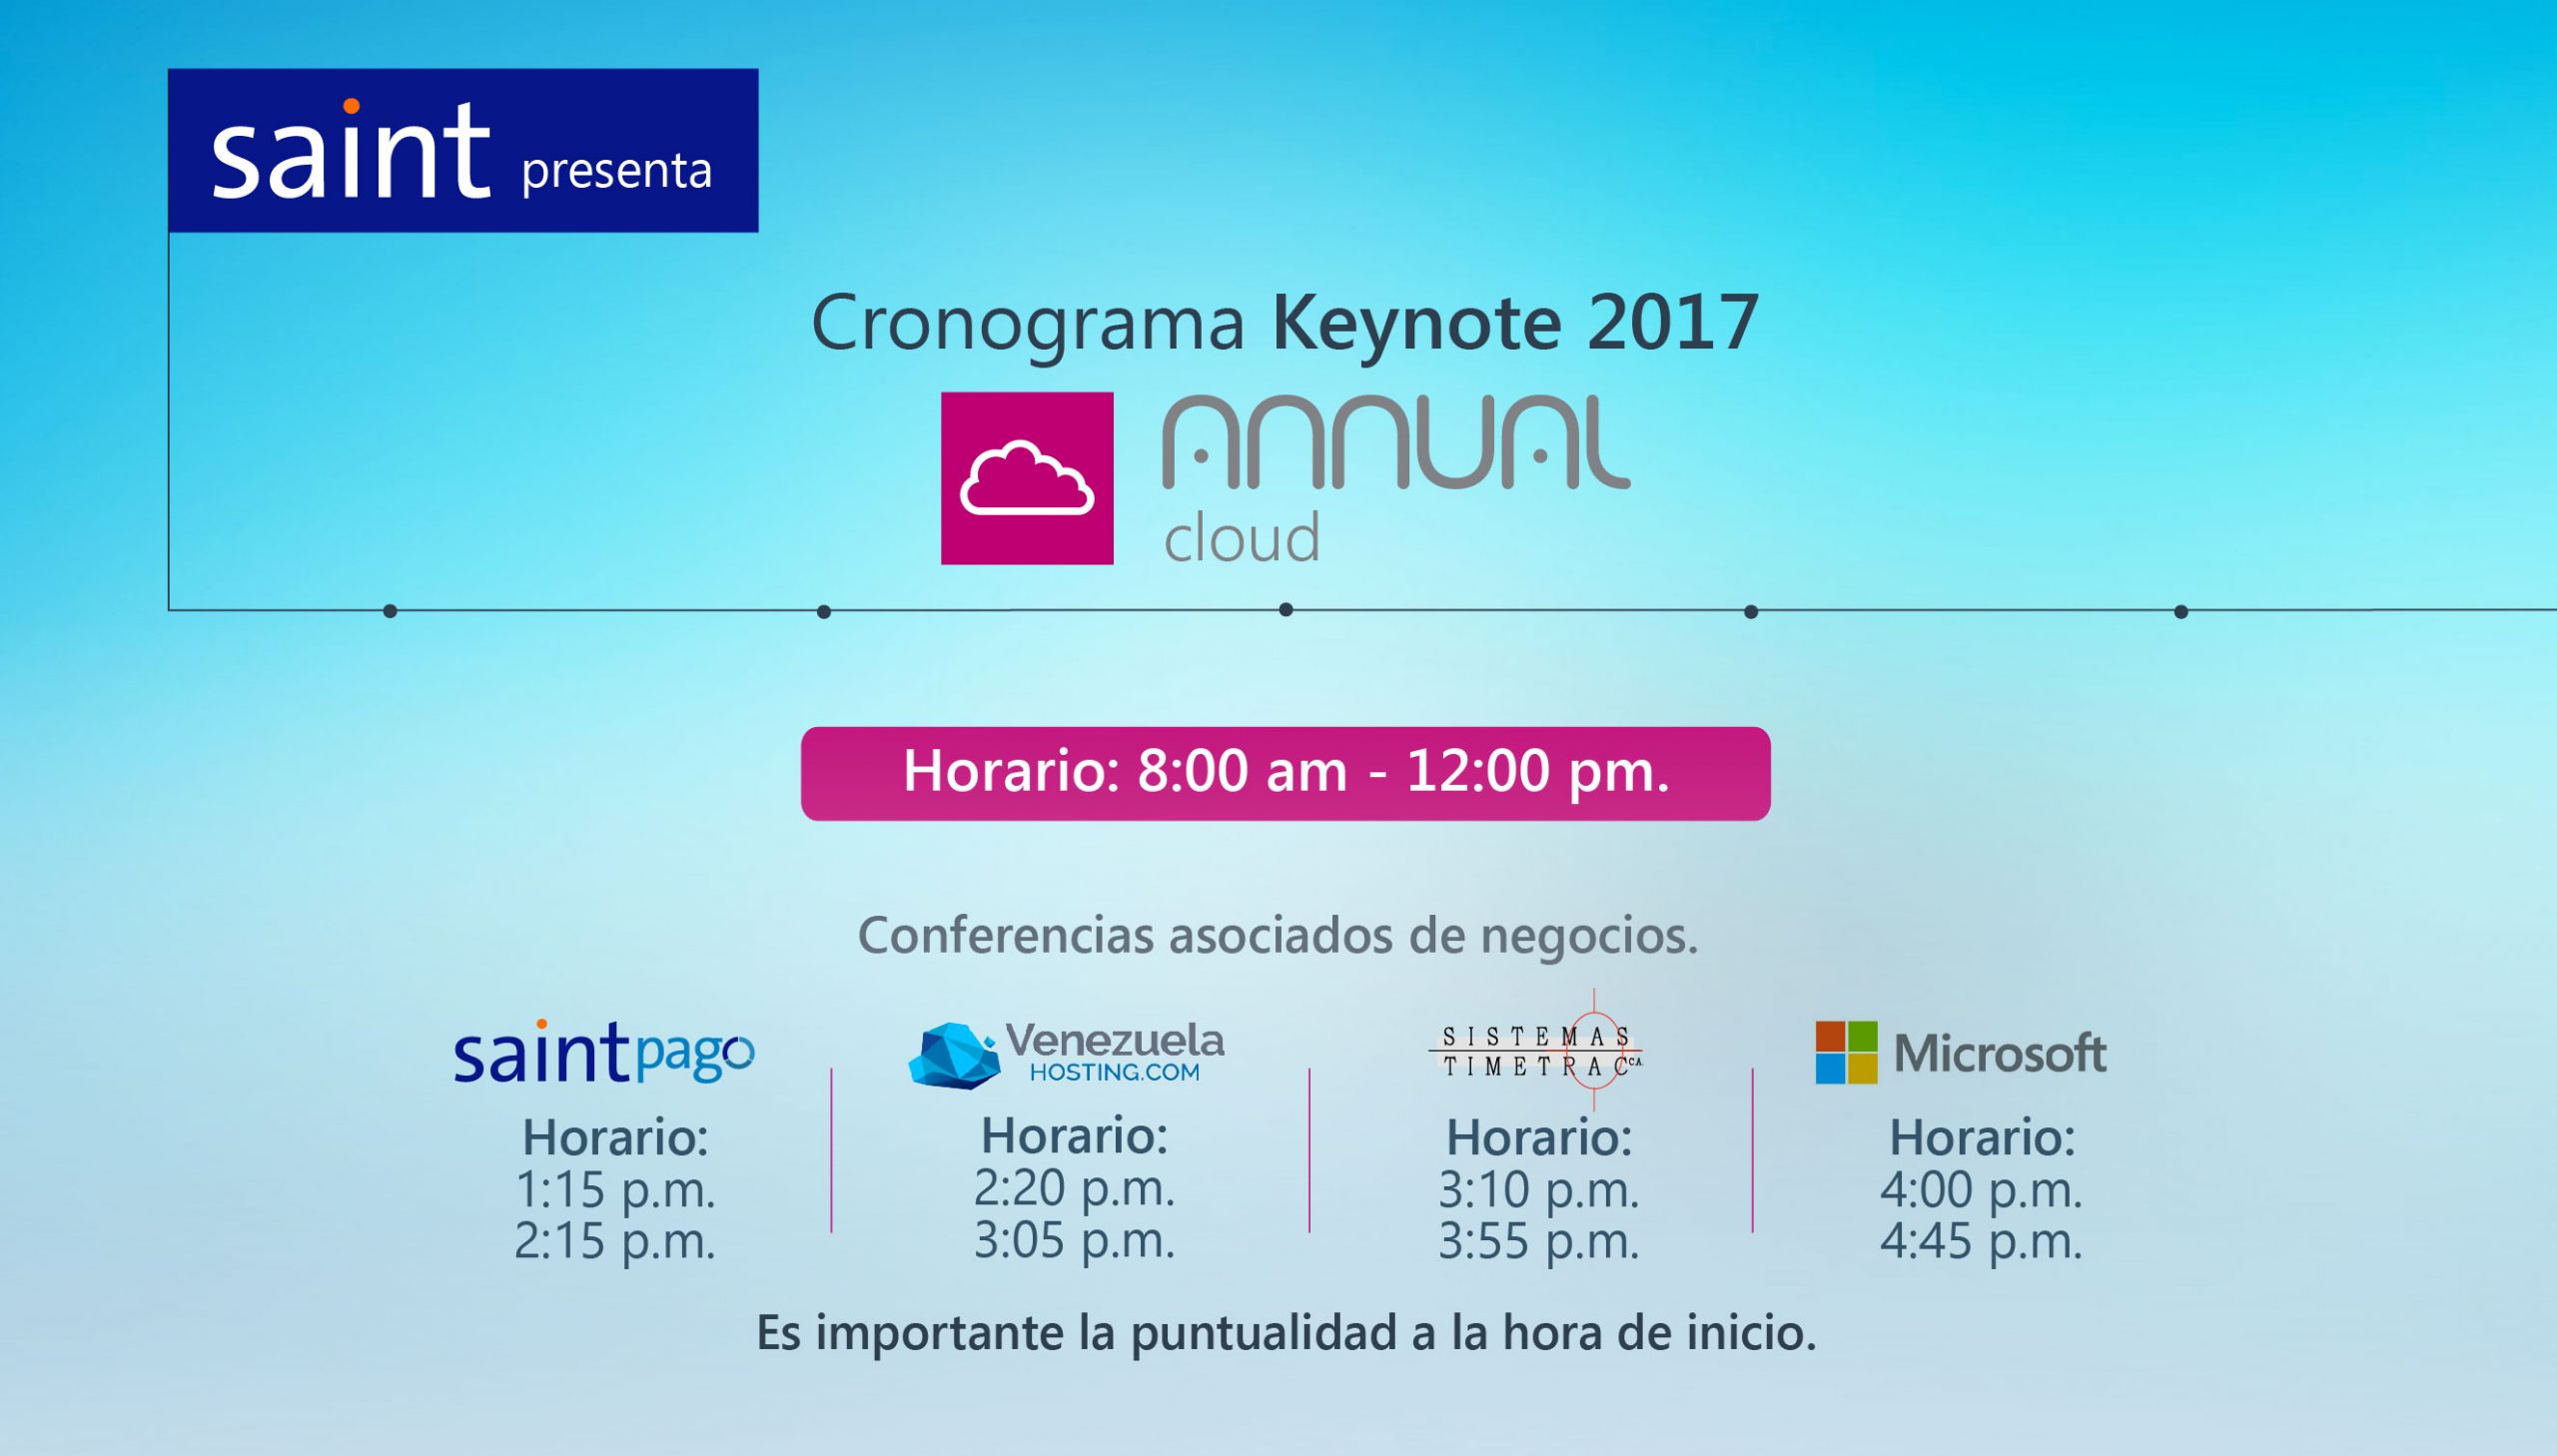 Keynote 2017 Annual Cloud